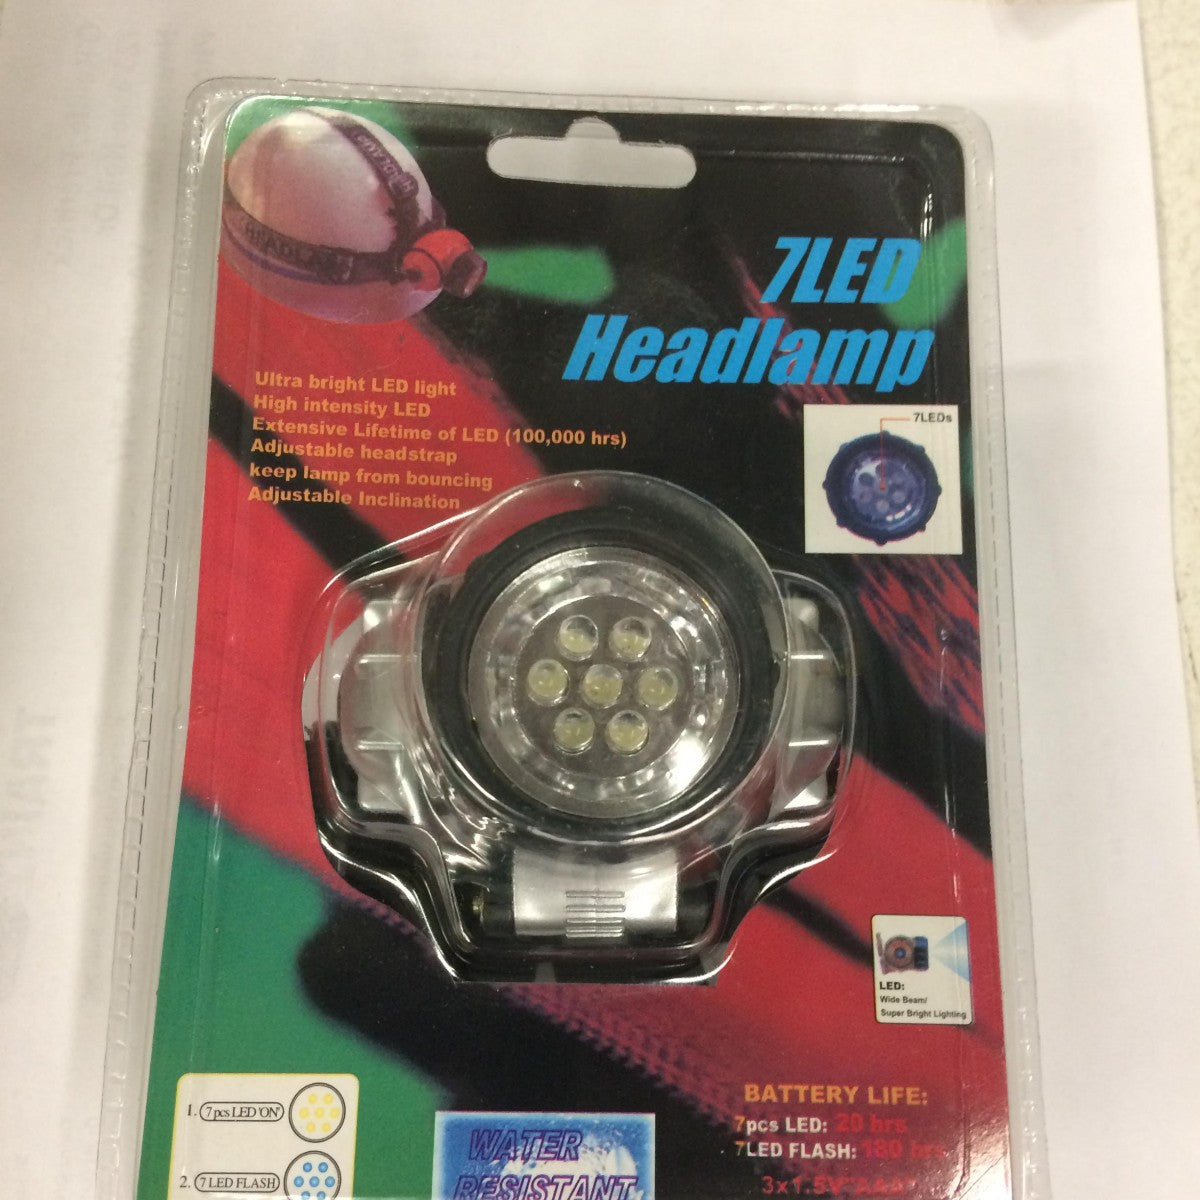 Acme 7-LED Headlamp with Adjustable Strap